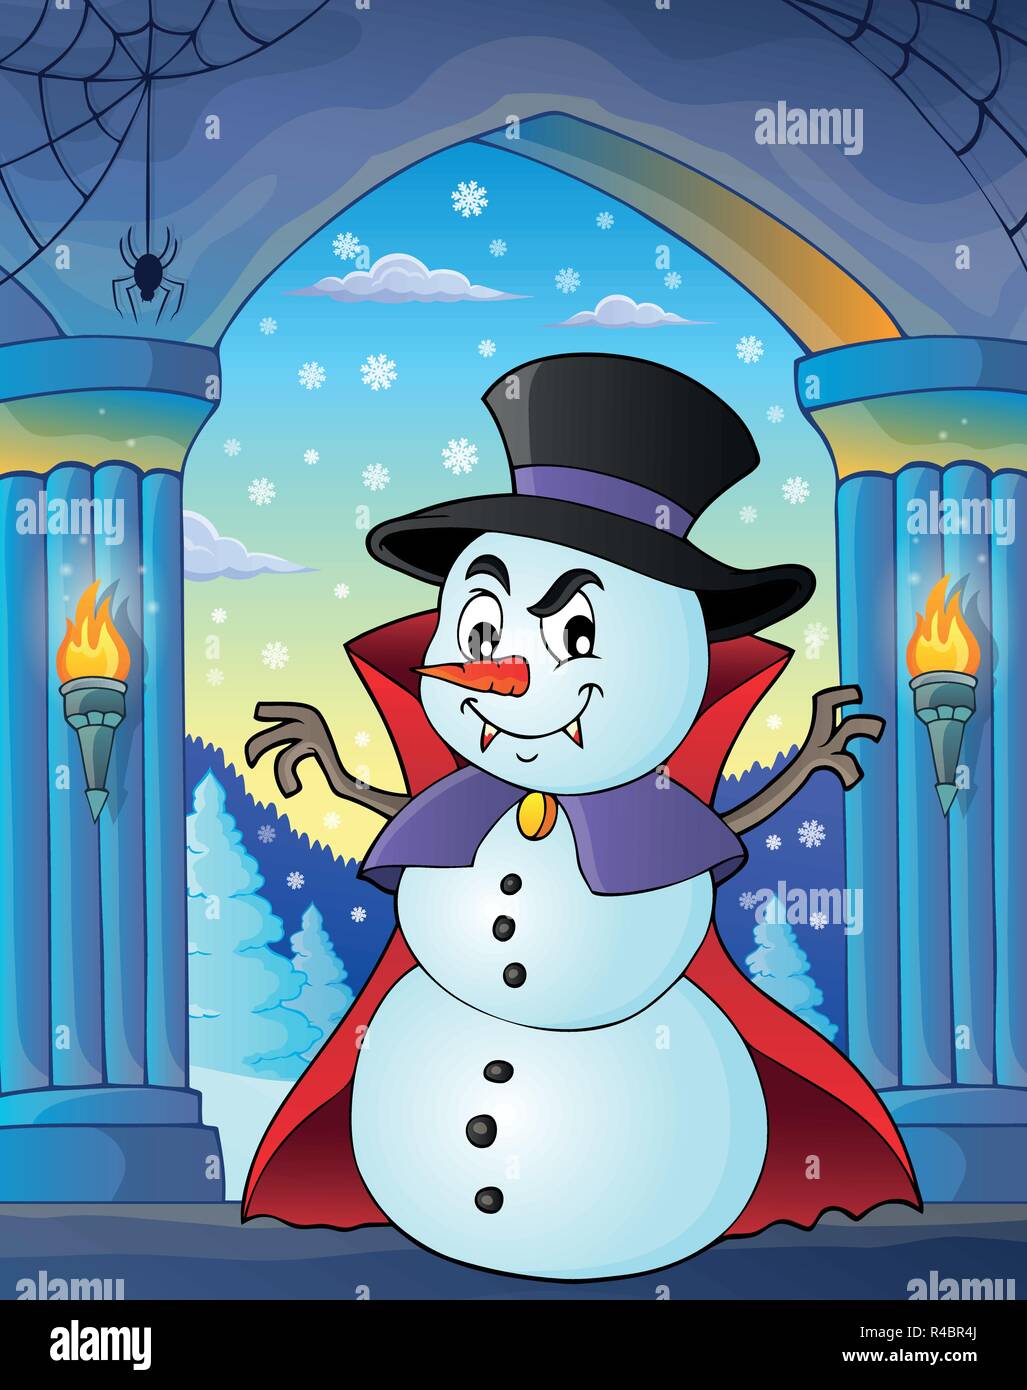 Vampire snowman theme image 3 - eps10 vector illustration. Stock Vector